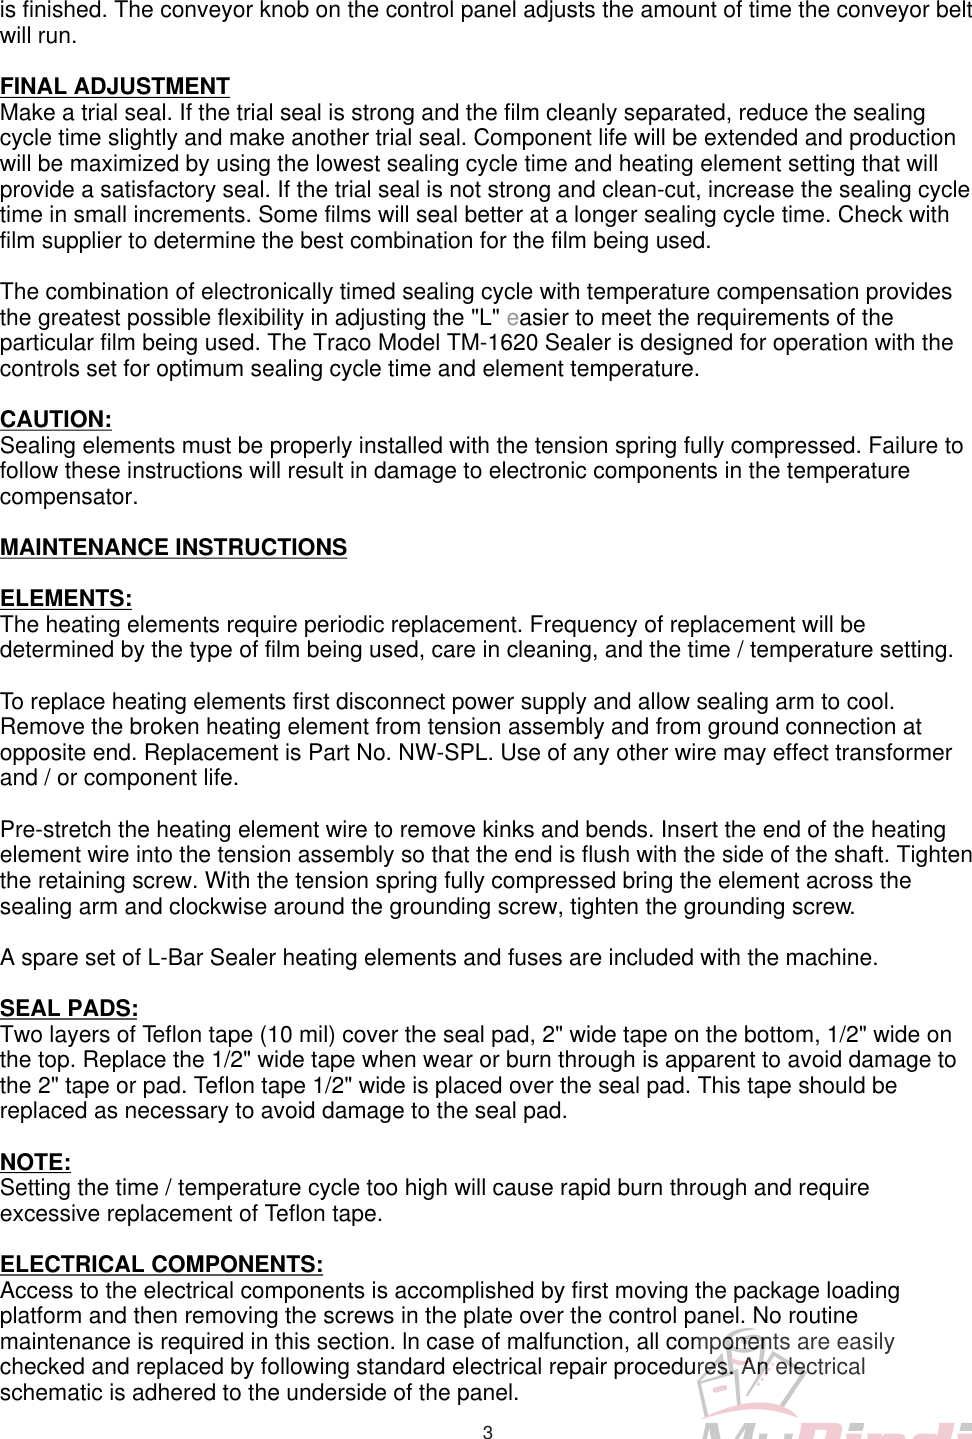 Page 5 of 10 - MyBinding Traco-Tm1620-Manual User Manual